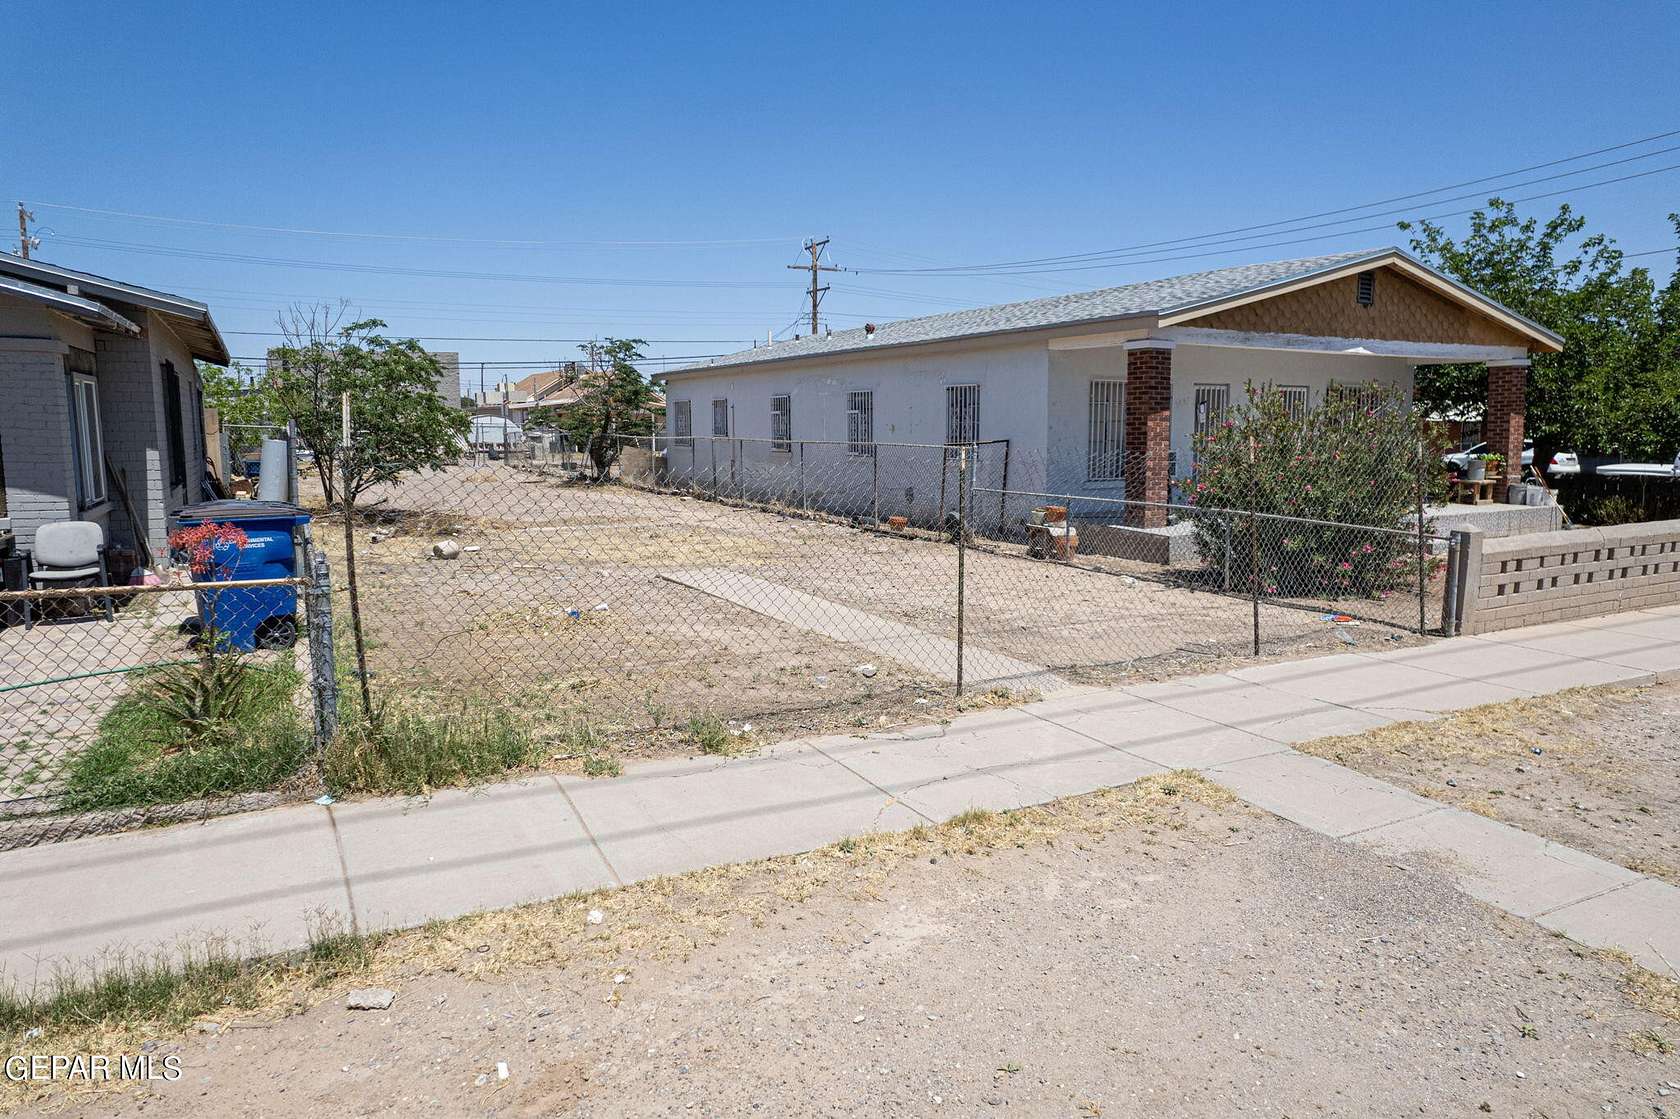 0.1 Acres of Land for Sale in El Paso, Texas